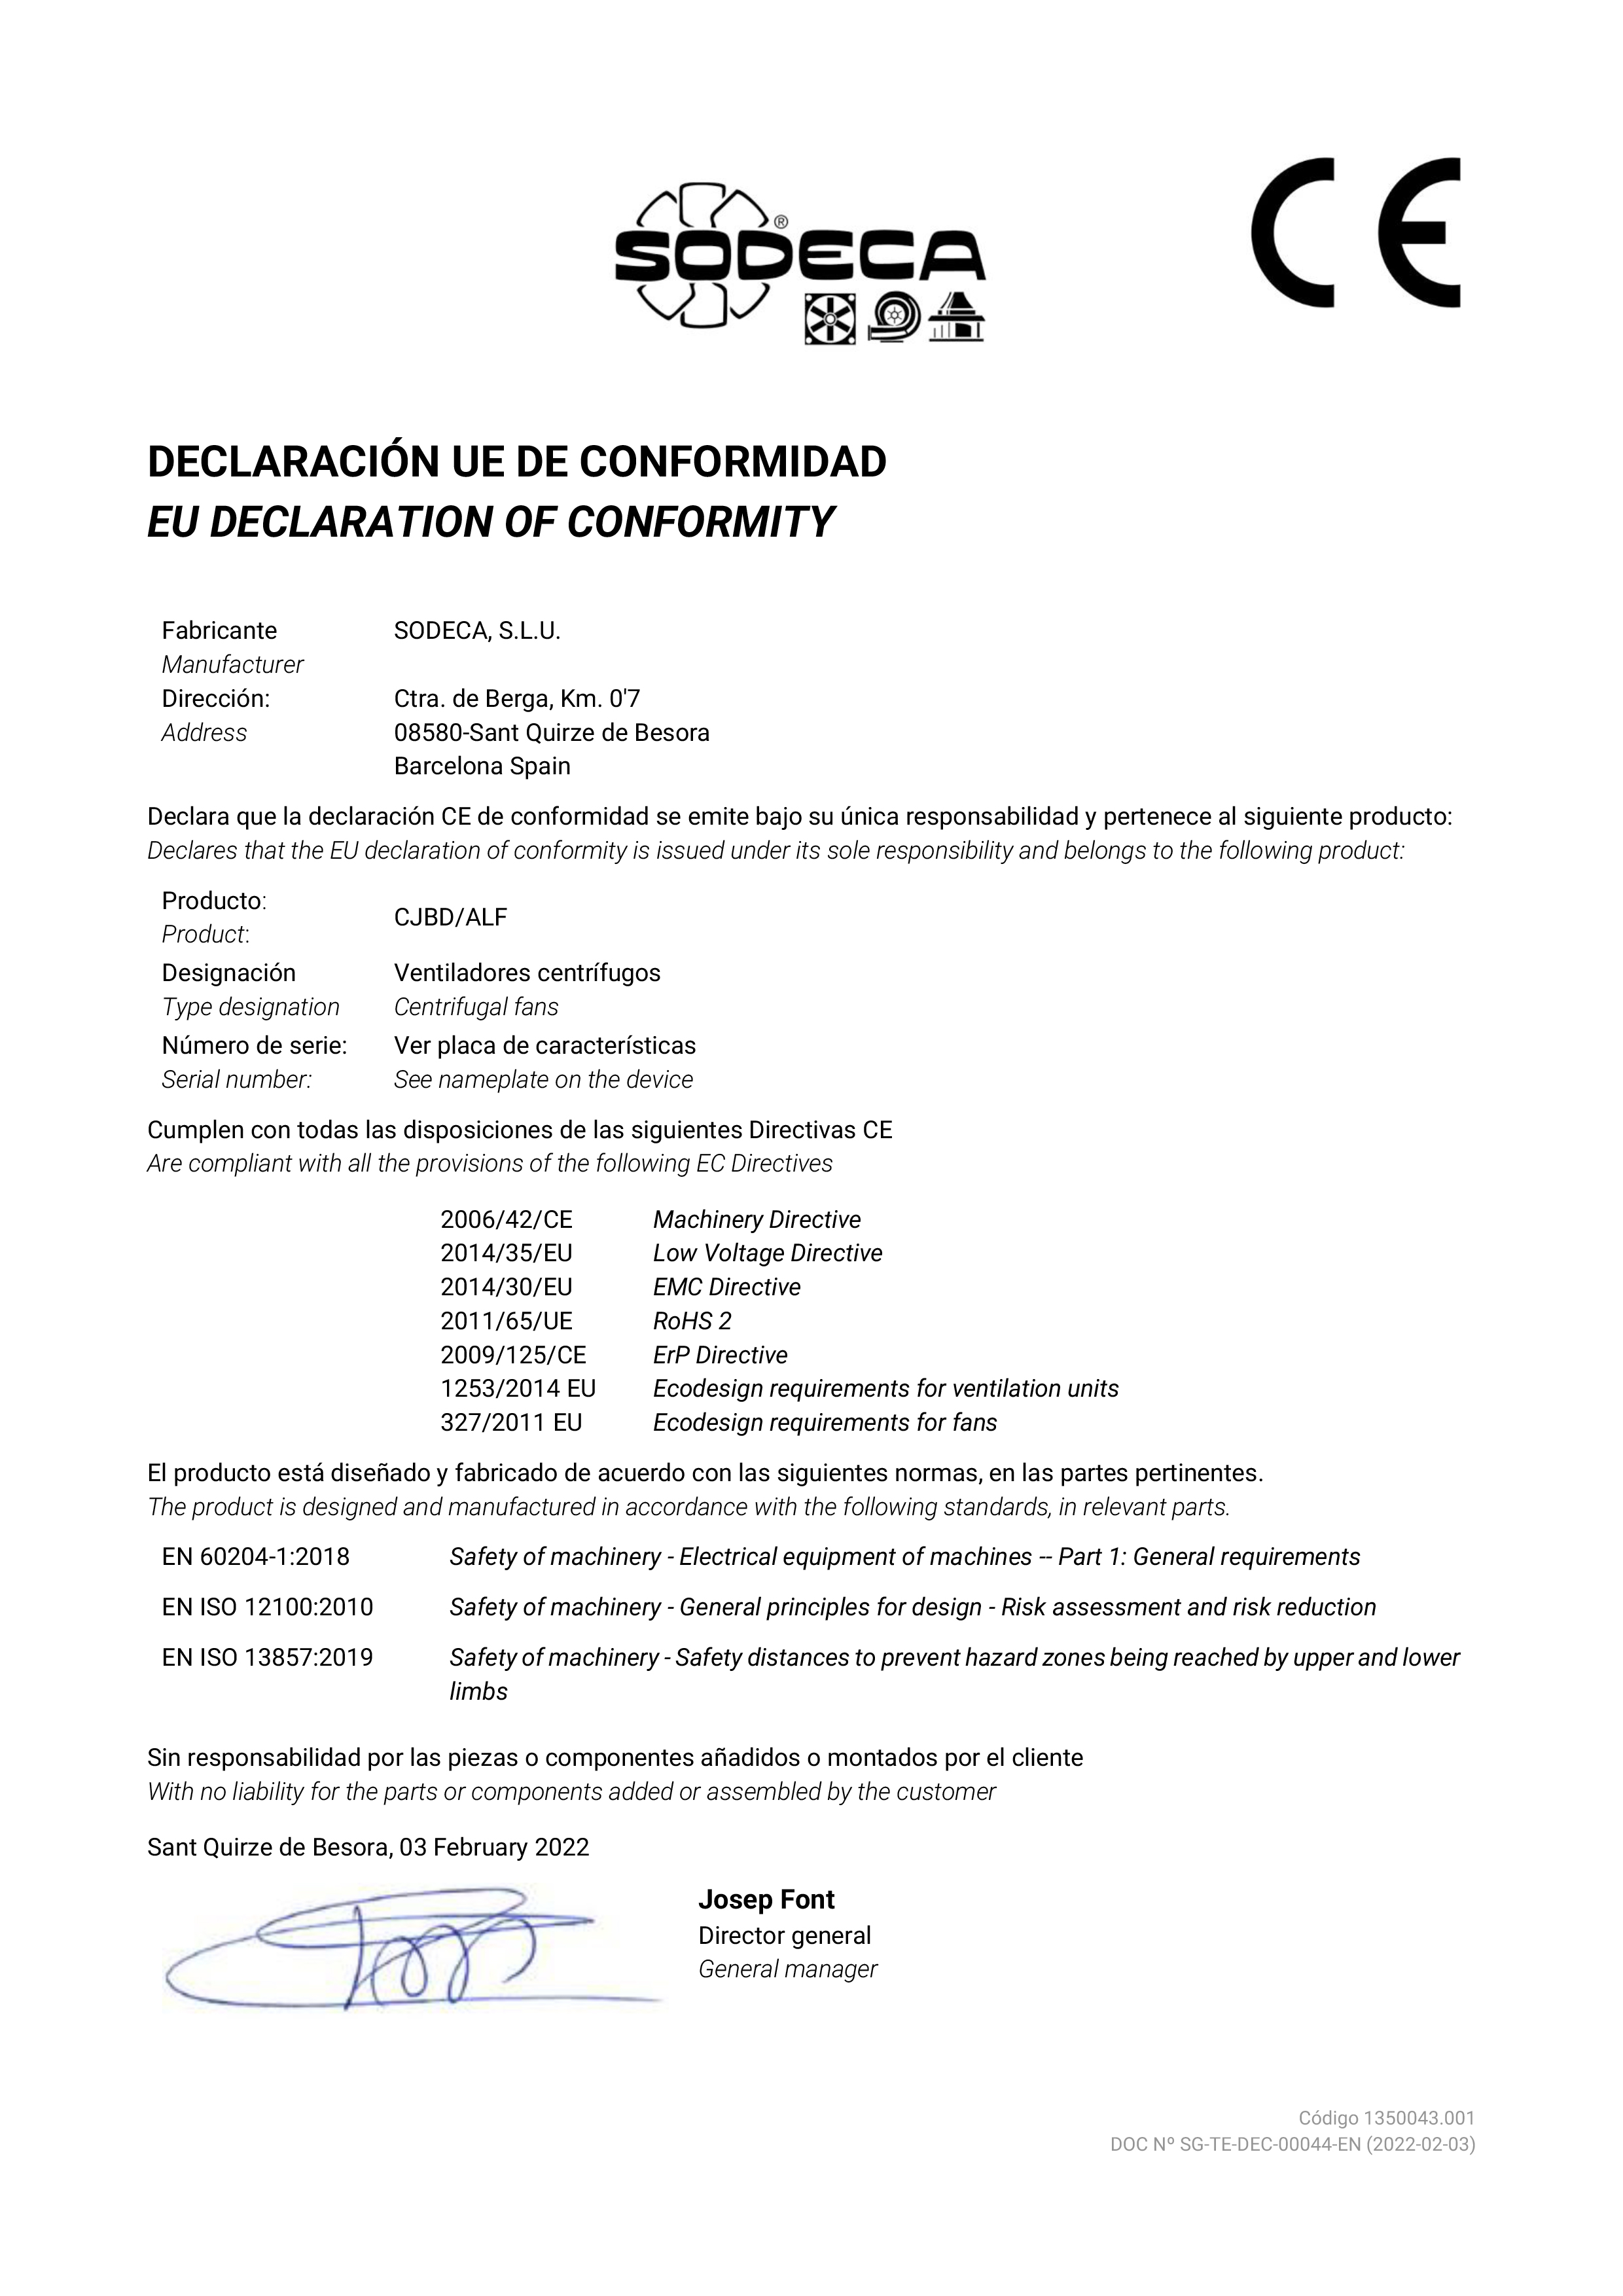 DECLARATION of CONFORMITY "CJBD/ALF"